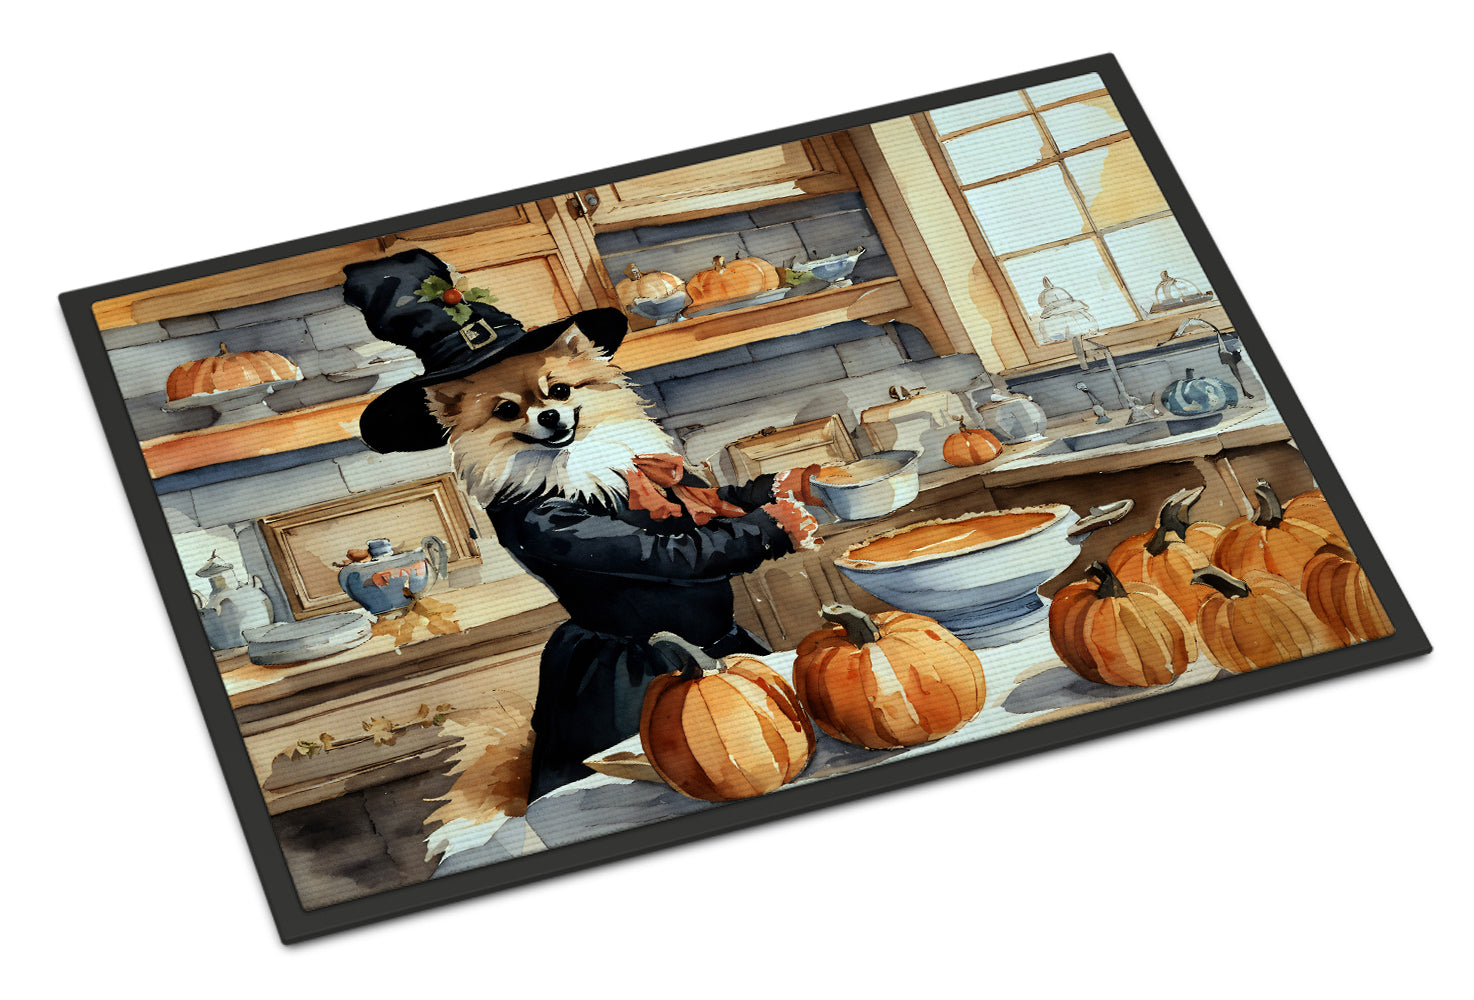 Buy this Pomeranian Fall Kitchen Pumpkins Doormat 18x27